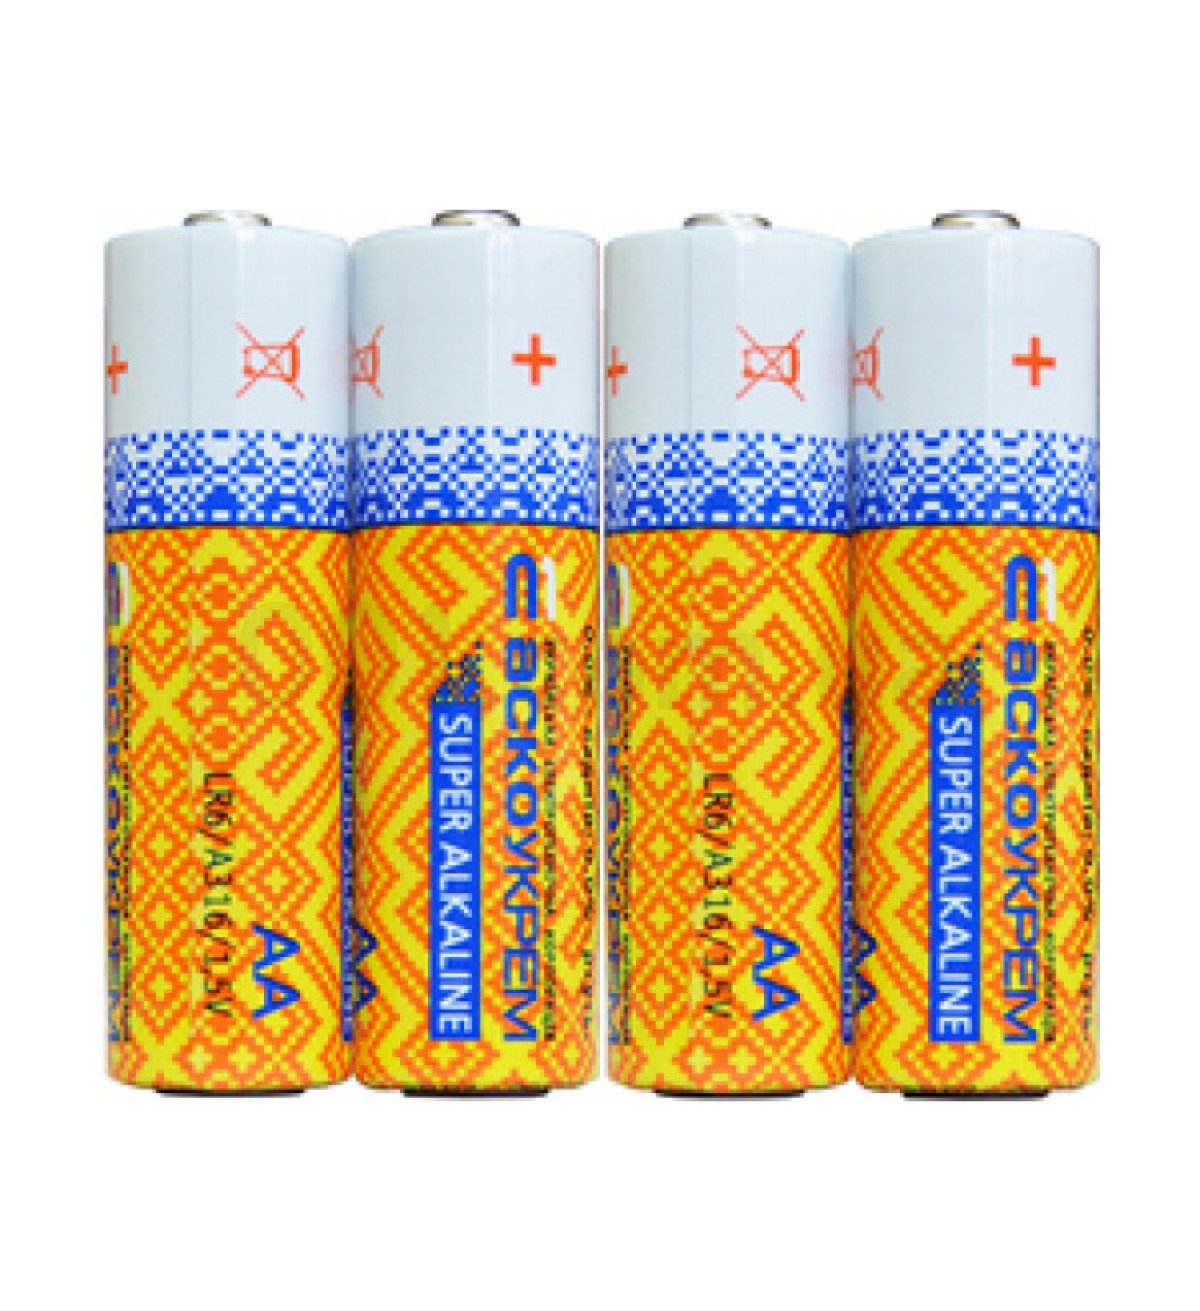 Батарейка щелочная AА.LR6.SP4, типоразмер AA упаковка shrink 4 шт., АСКО-УКРЕМ 98_107.jpg